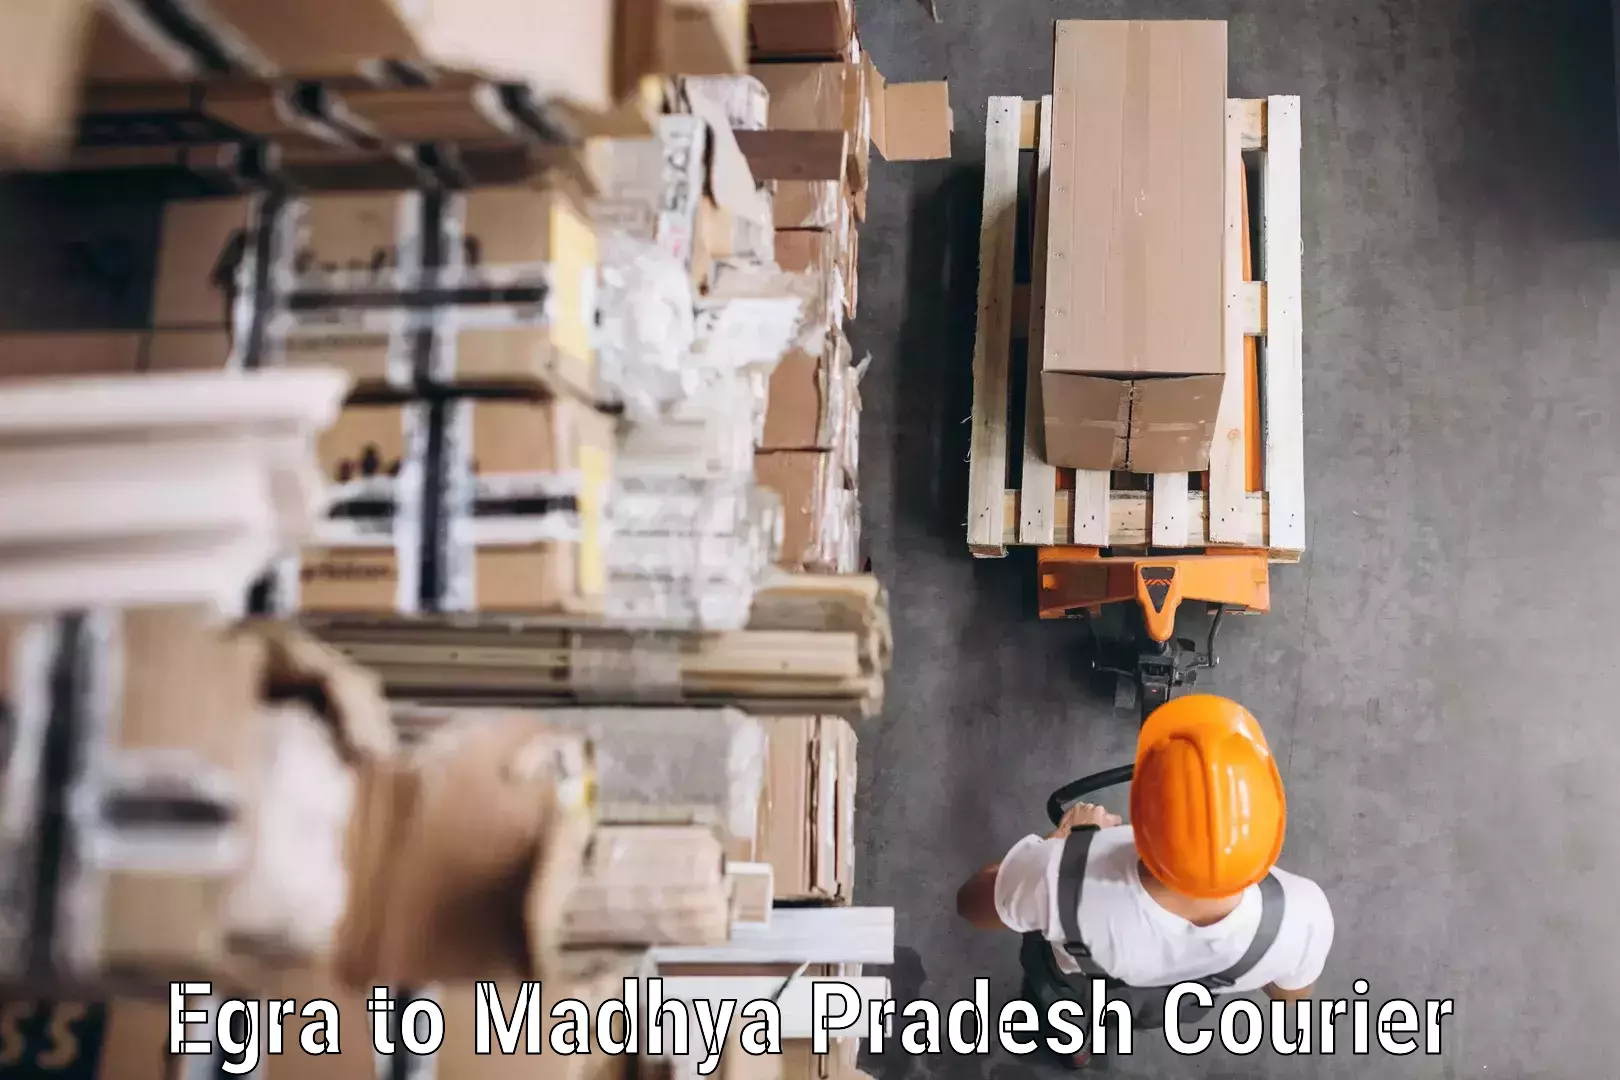 Digital courier platforms Egra to Madhya Pradesh